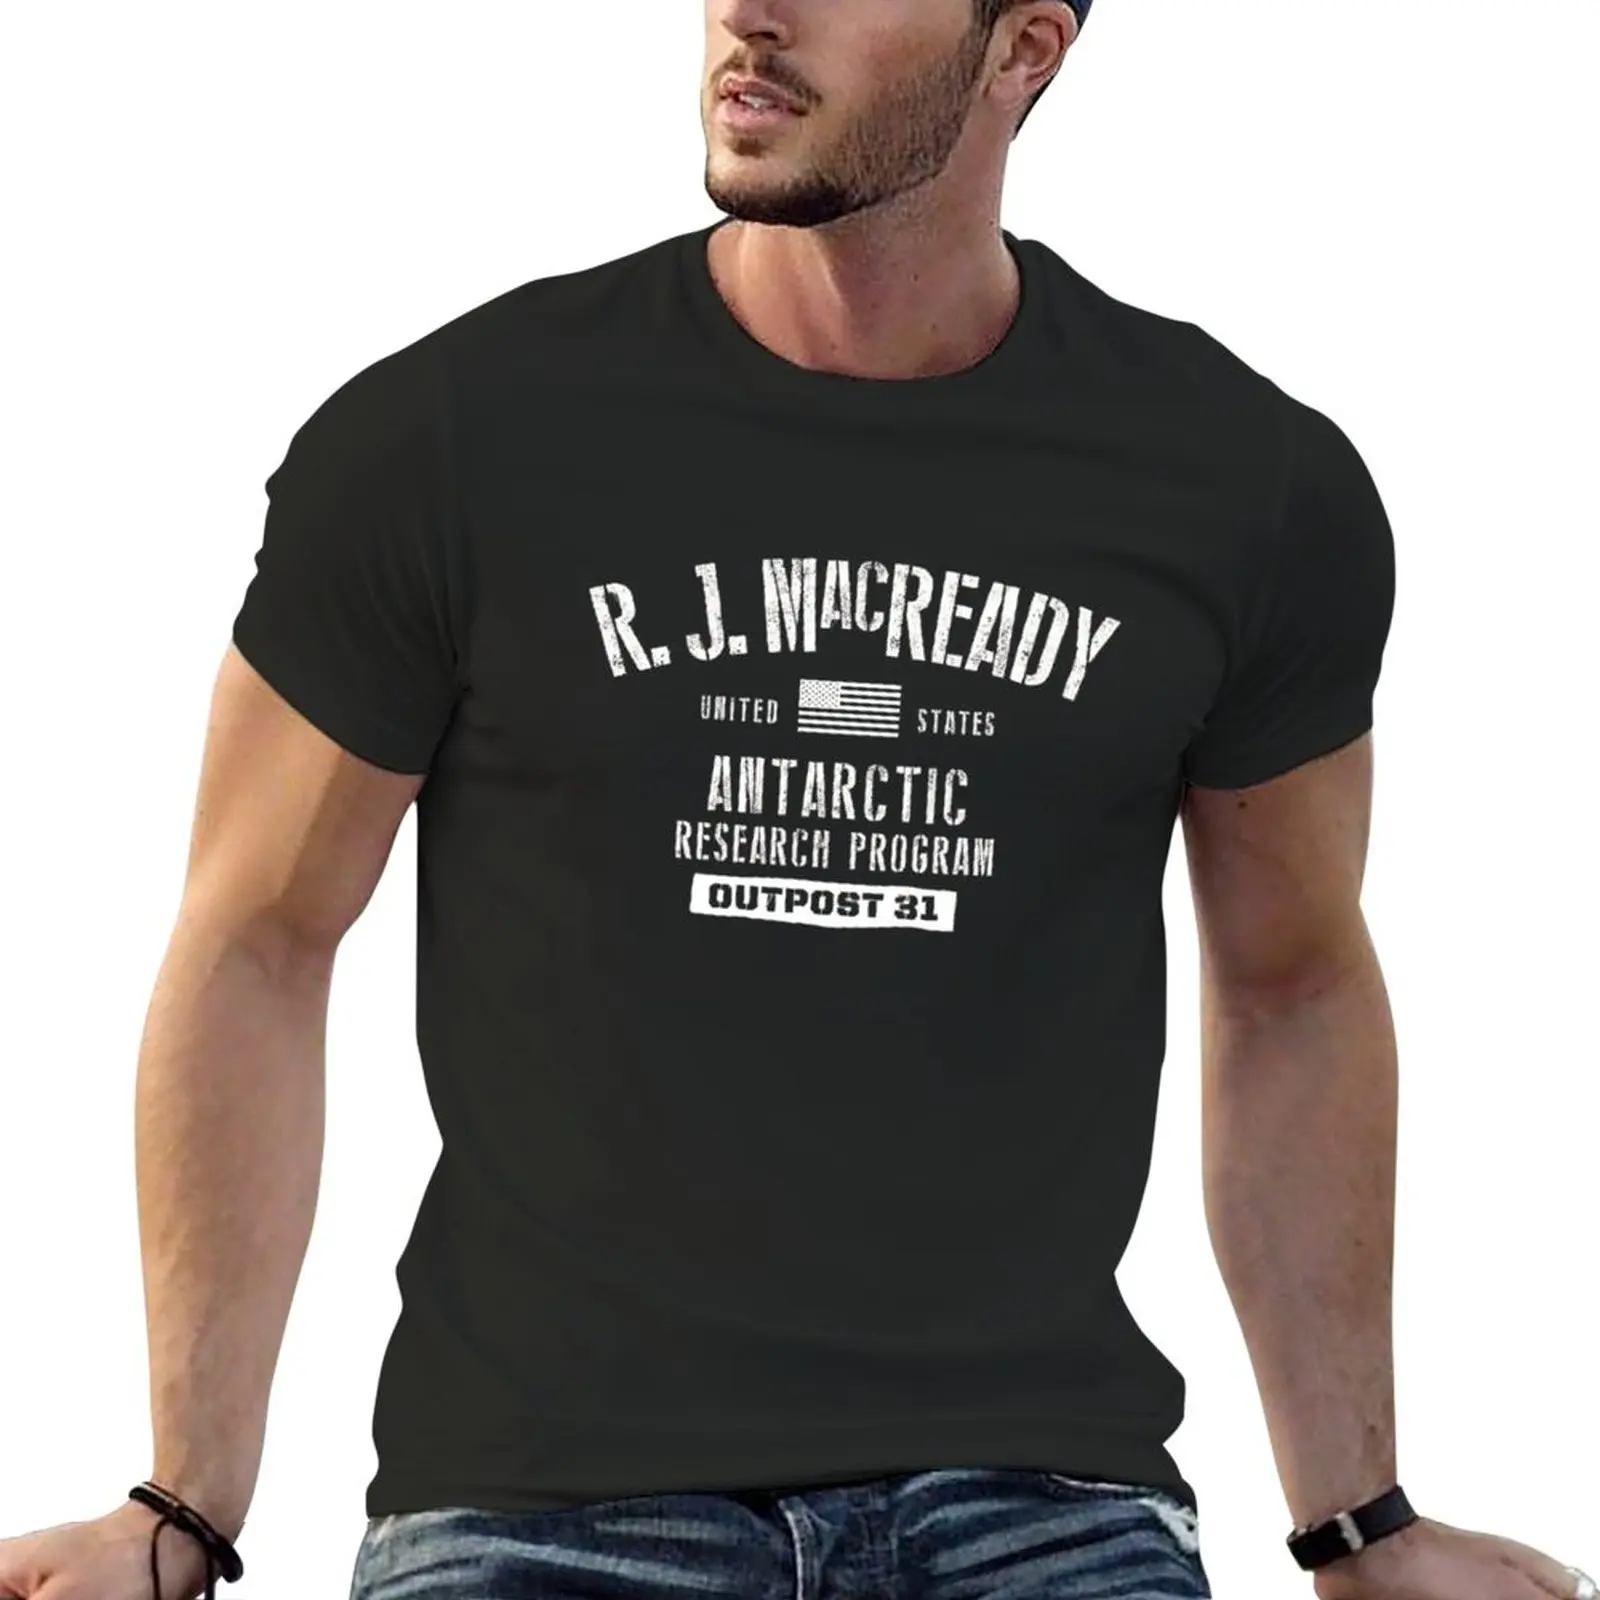 

Outpost 31 T-Shirt customizeds animal prinfor boys men workout shirt